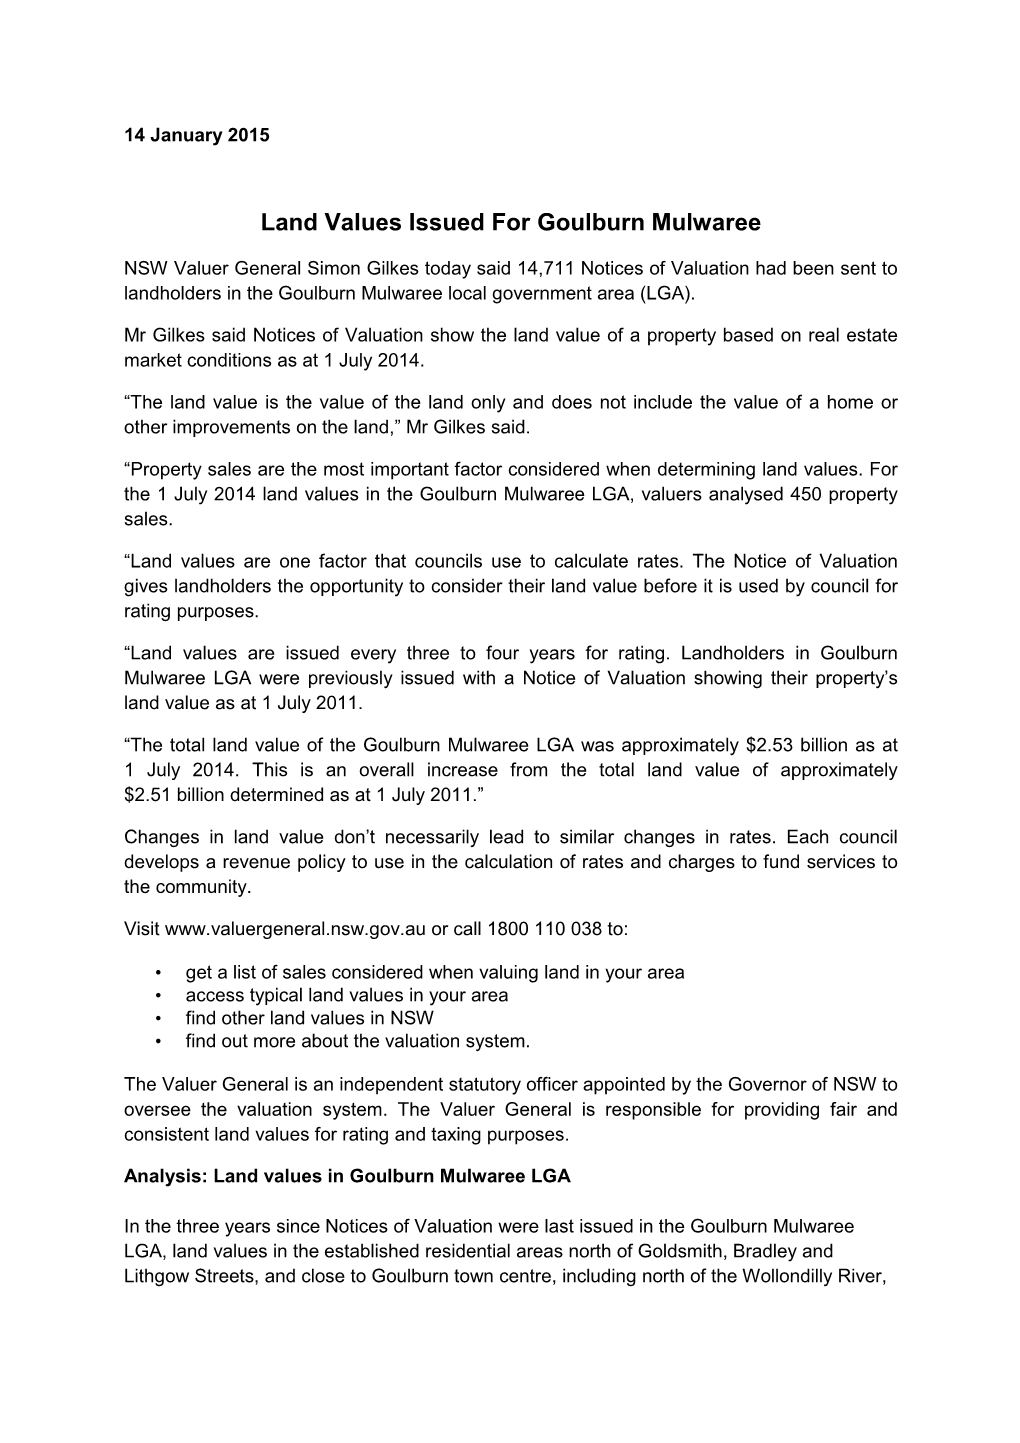 14 January 2015 Land Values Issued for Goulburn Mulwaree